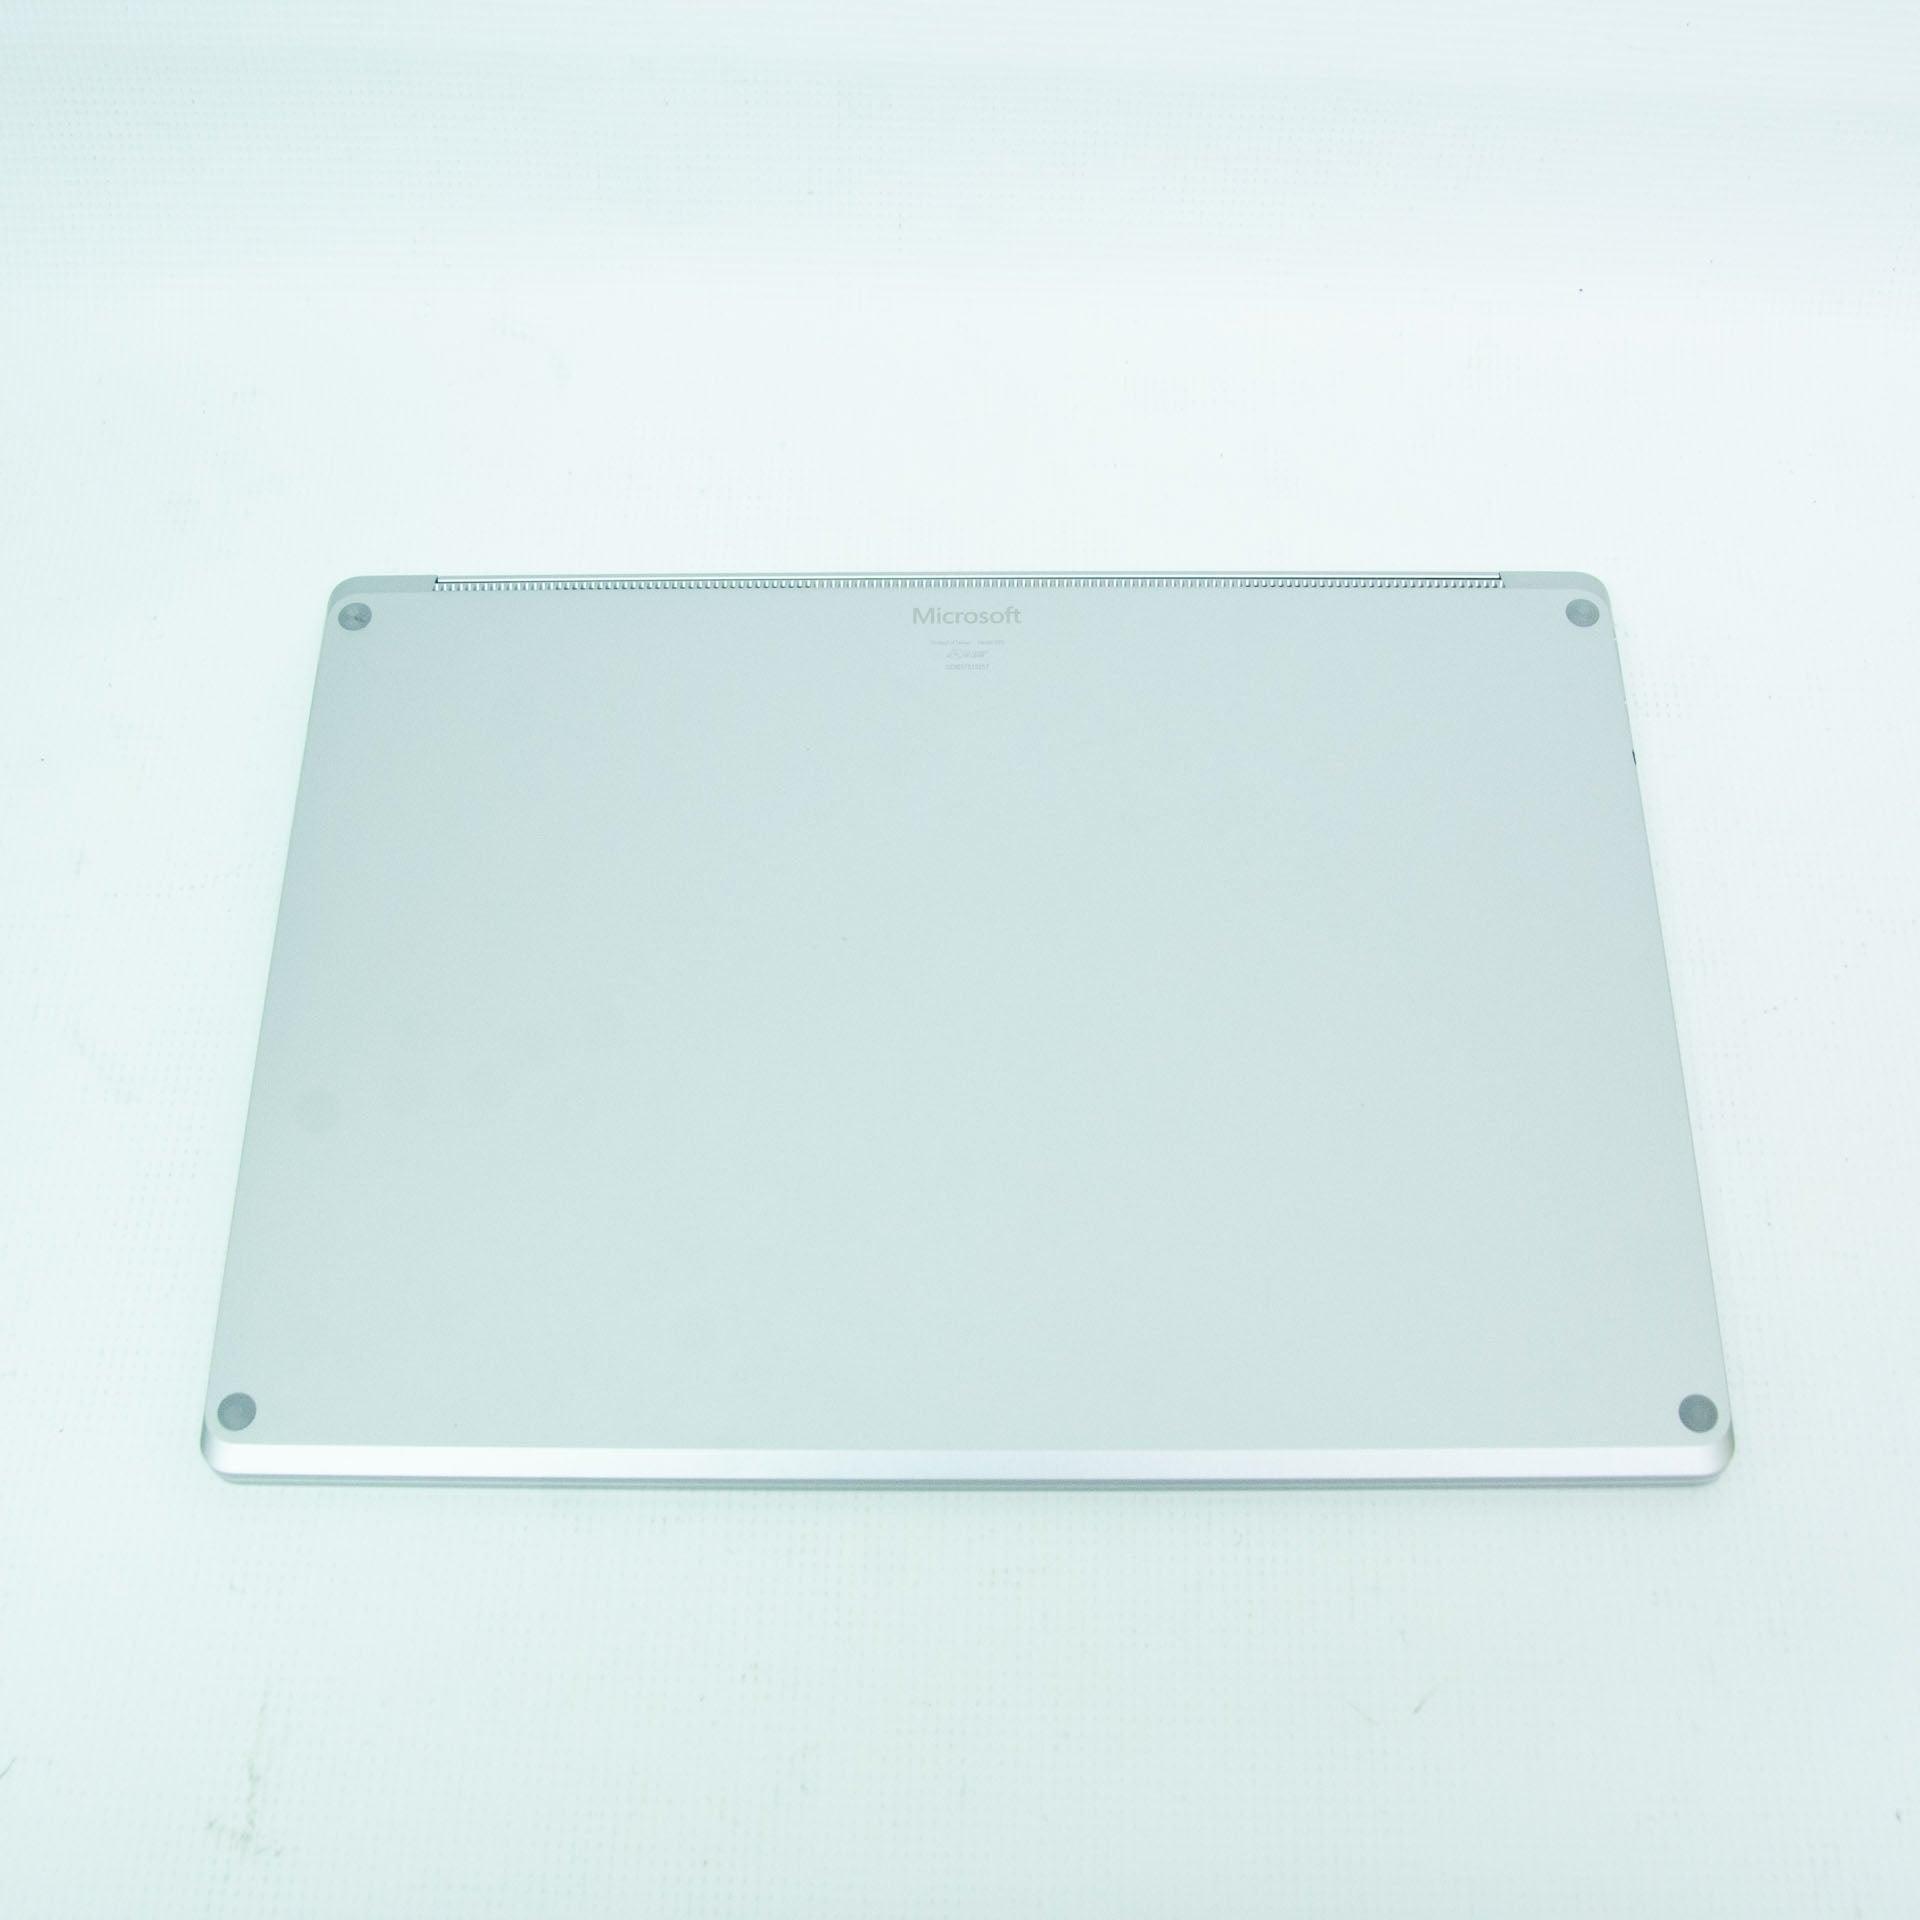 Microsoft Surface Laptop 1979 15" i7-1186G7, 16 GB Ram, 500 GB SSD - Silver - ipawnishop.com